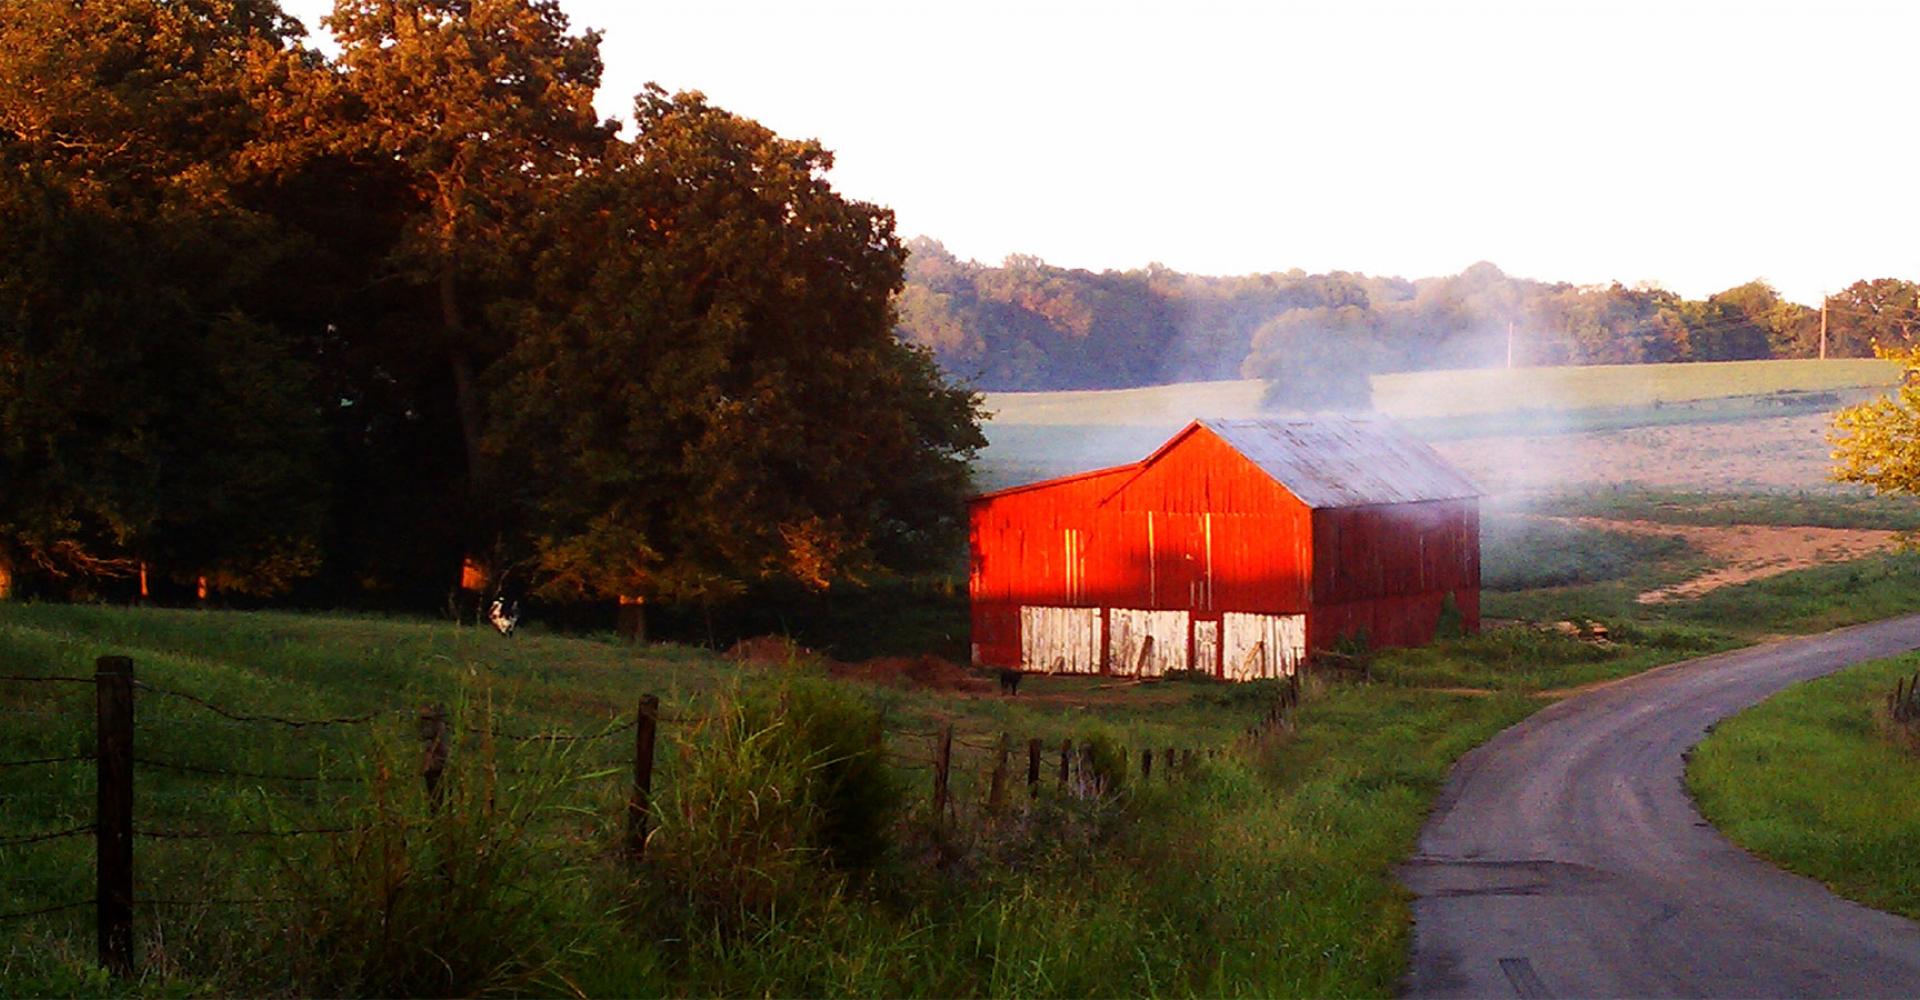 Barn on rural road